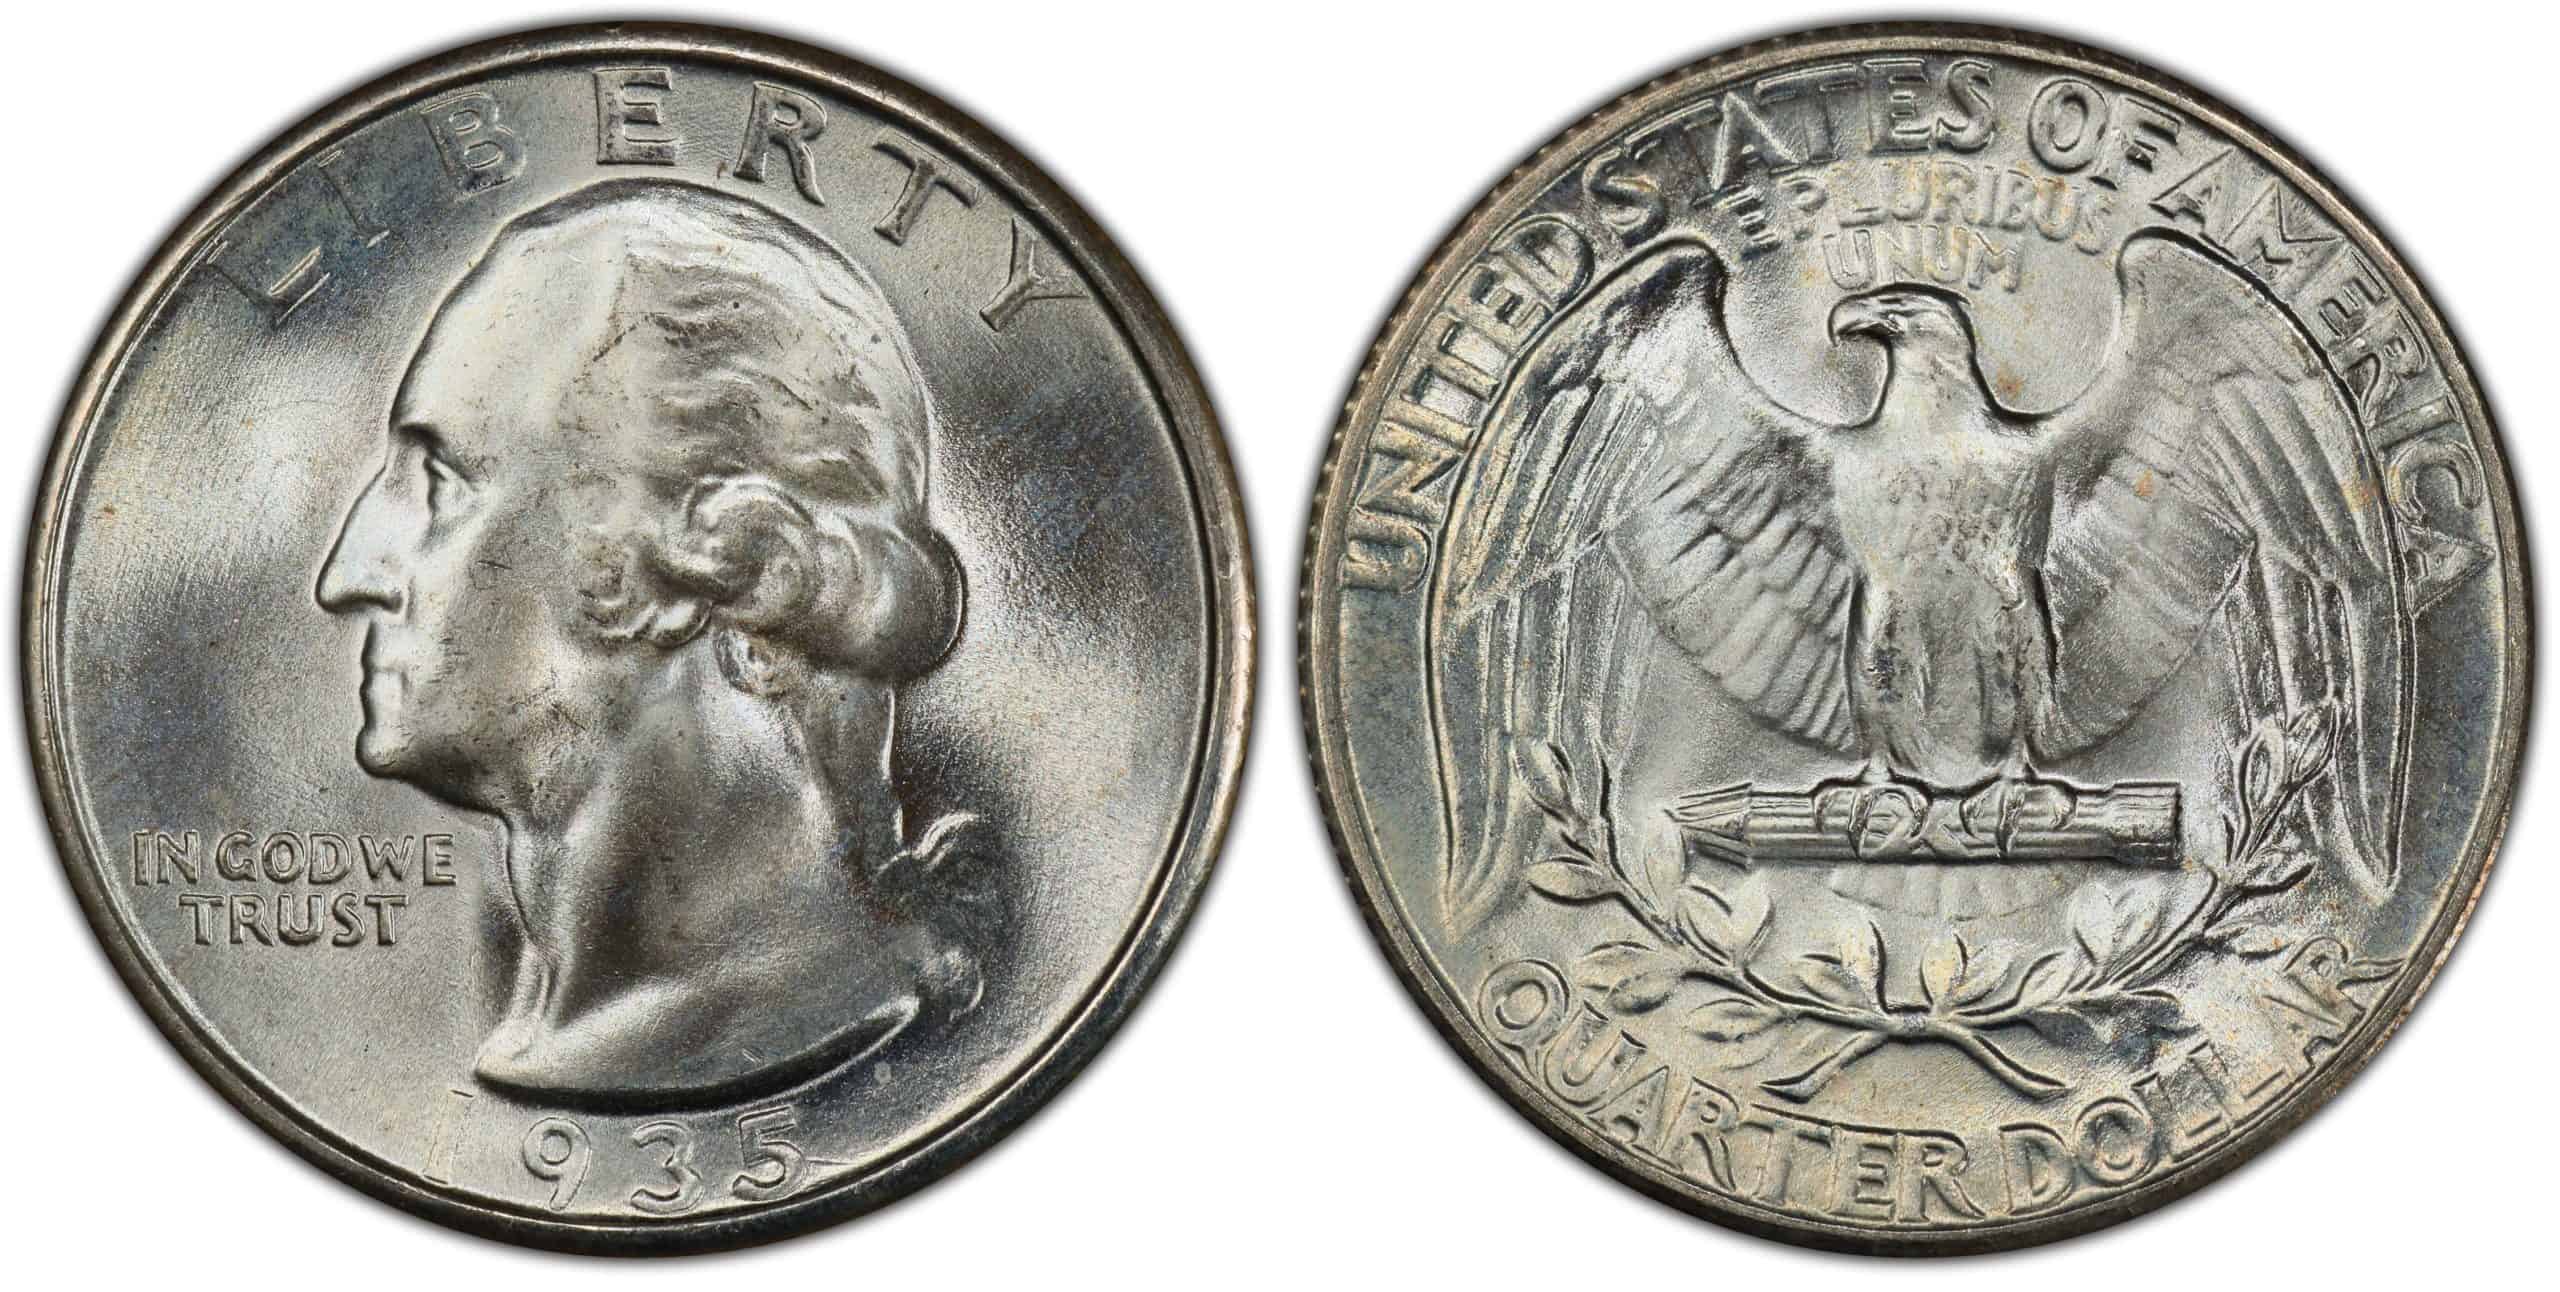 1935 Quarter without a mint mark